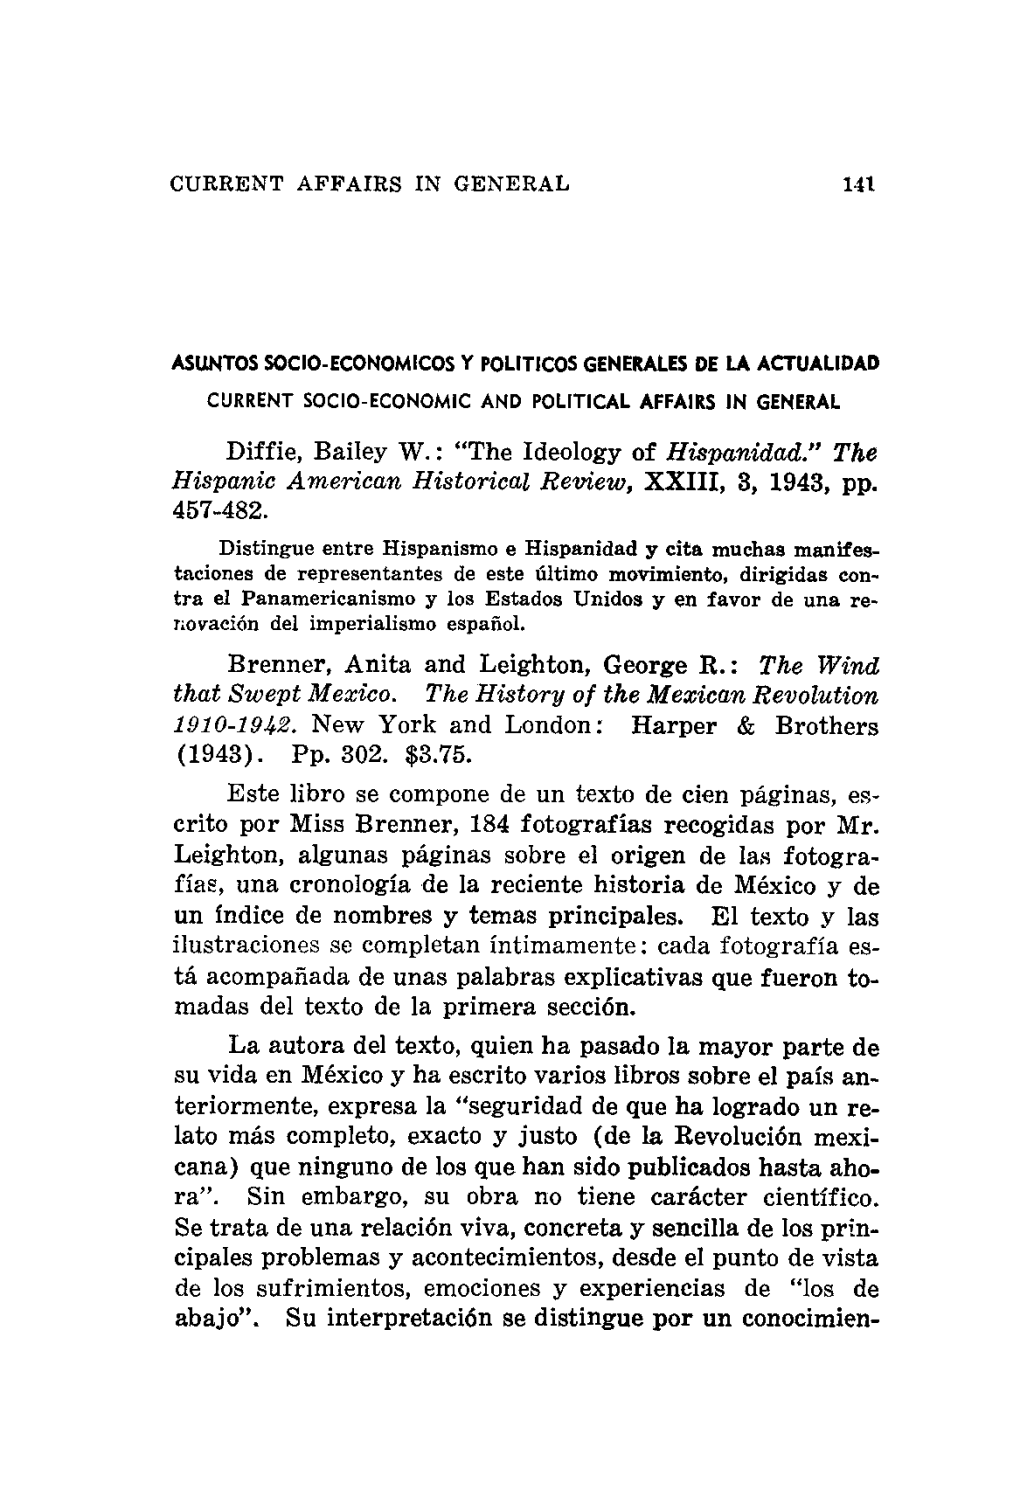 Diffie, Bailey W. : "The Ideology of Hispanidad." the Hispanic